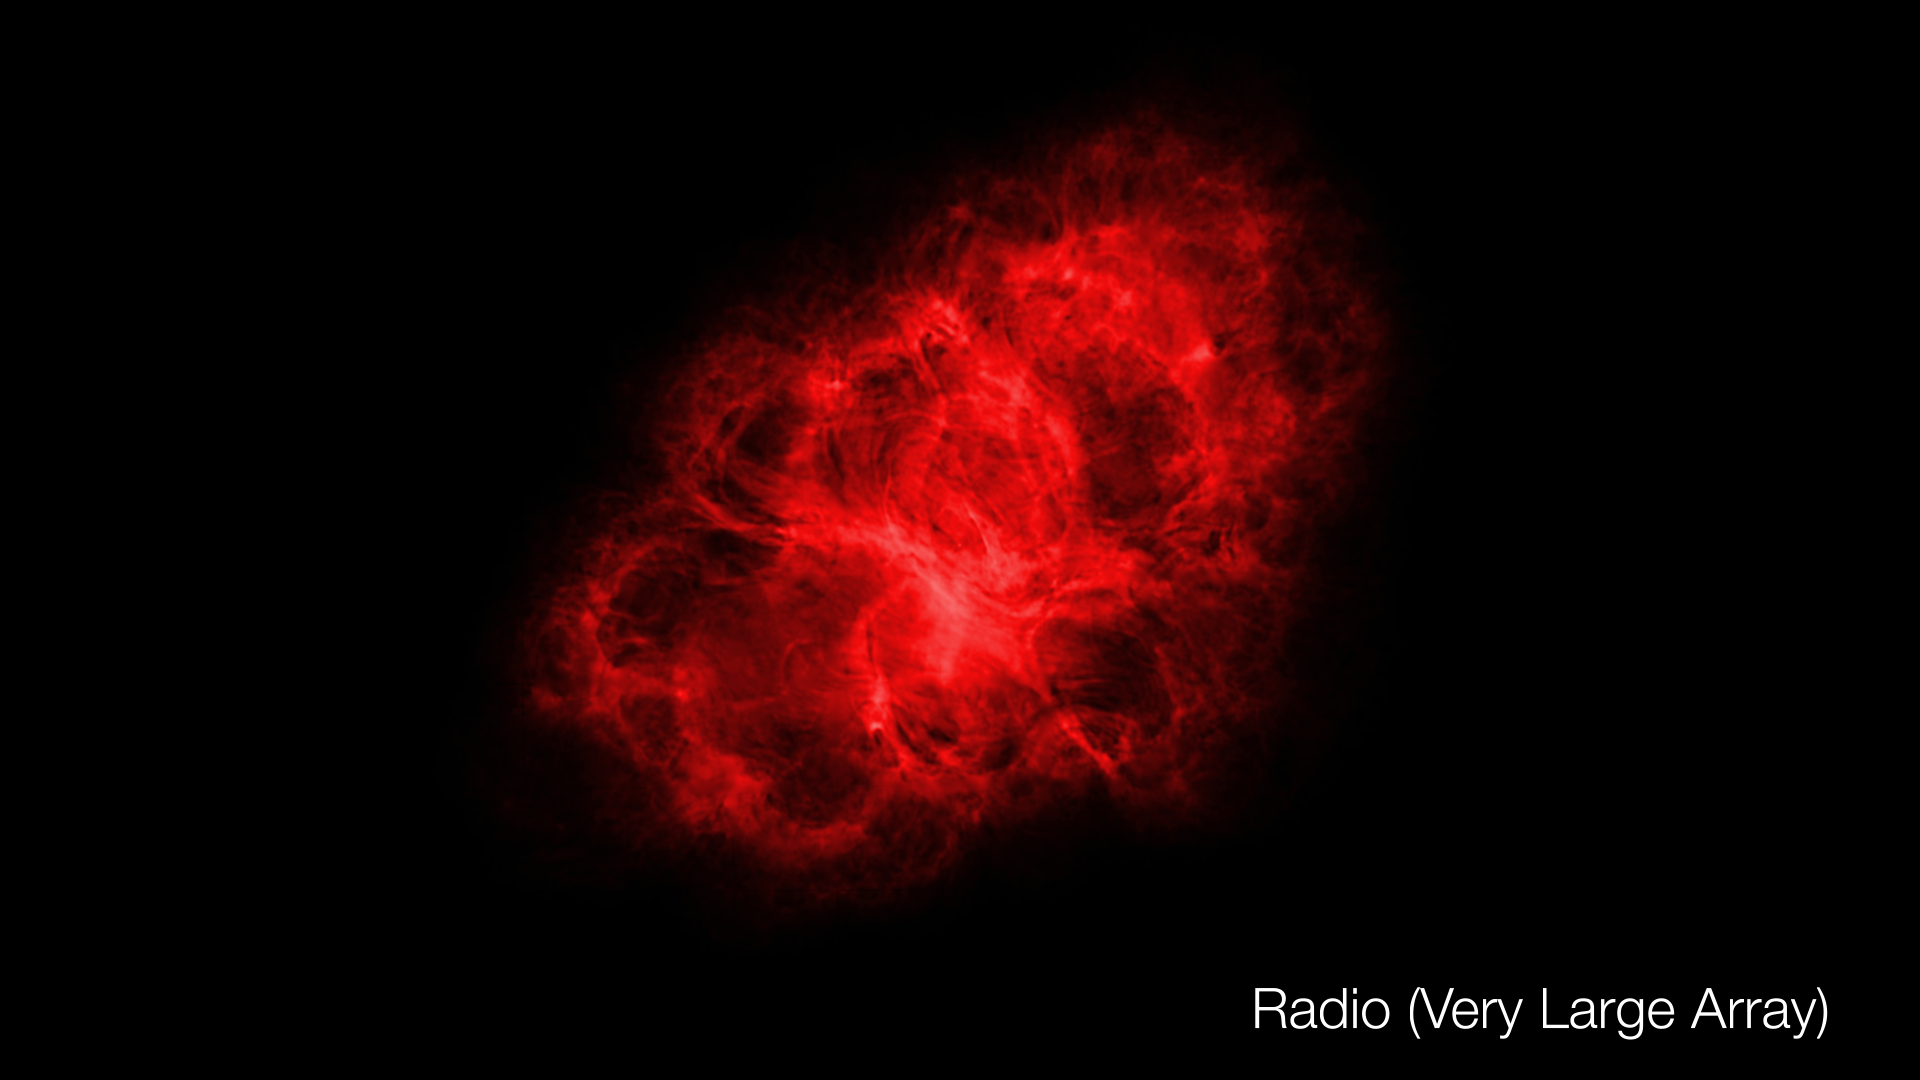 Radio image of the Crab Nebula.